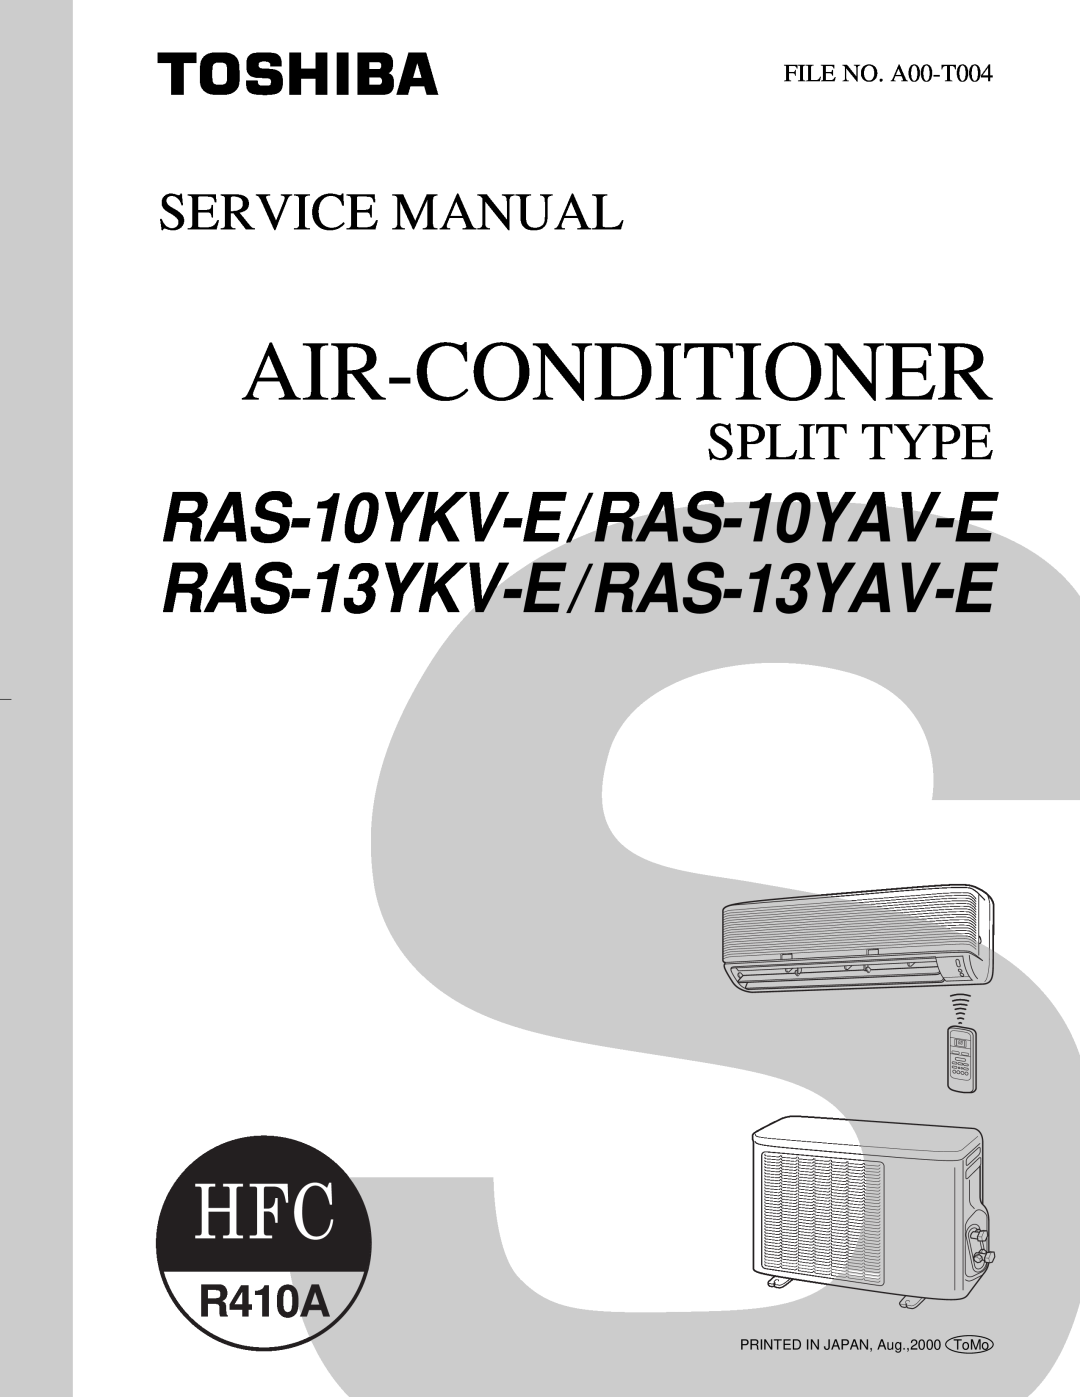 Toshiba service manual Air-Conditioner, RAS-10YKV-E /RAS-10YAV-E RAS-13YKV-E /RAS-13YAV-E, Split Type, R410A 